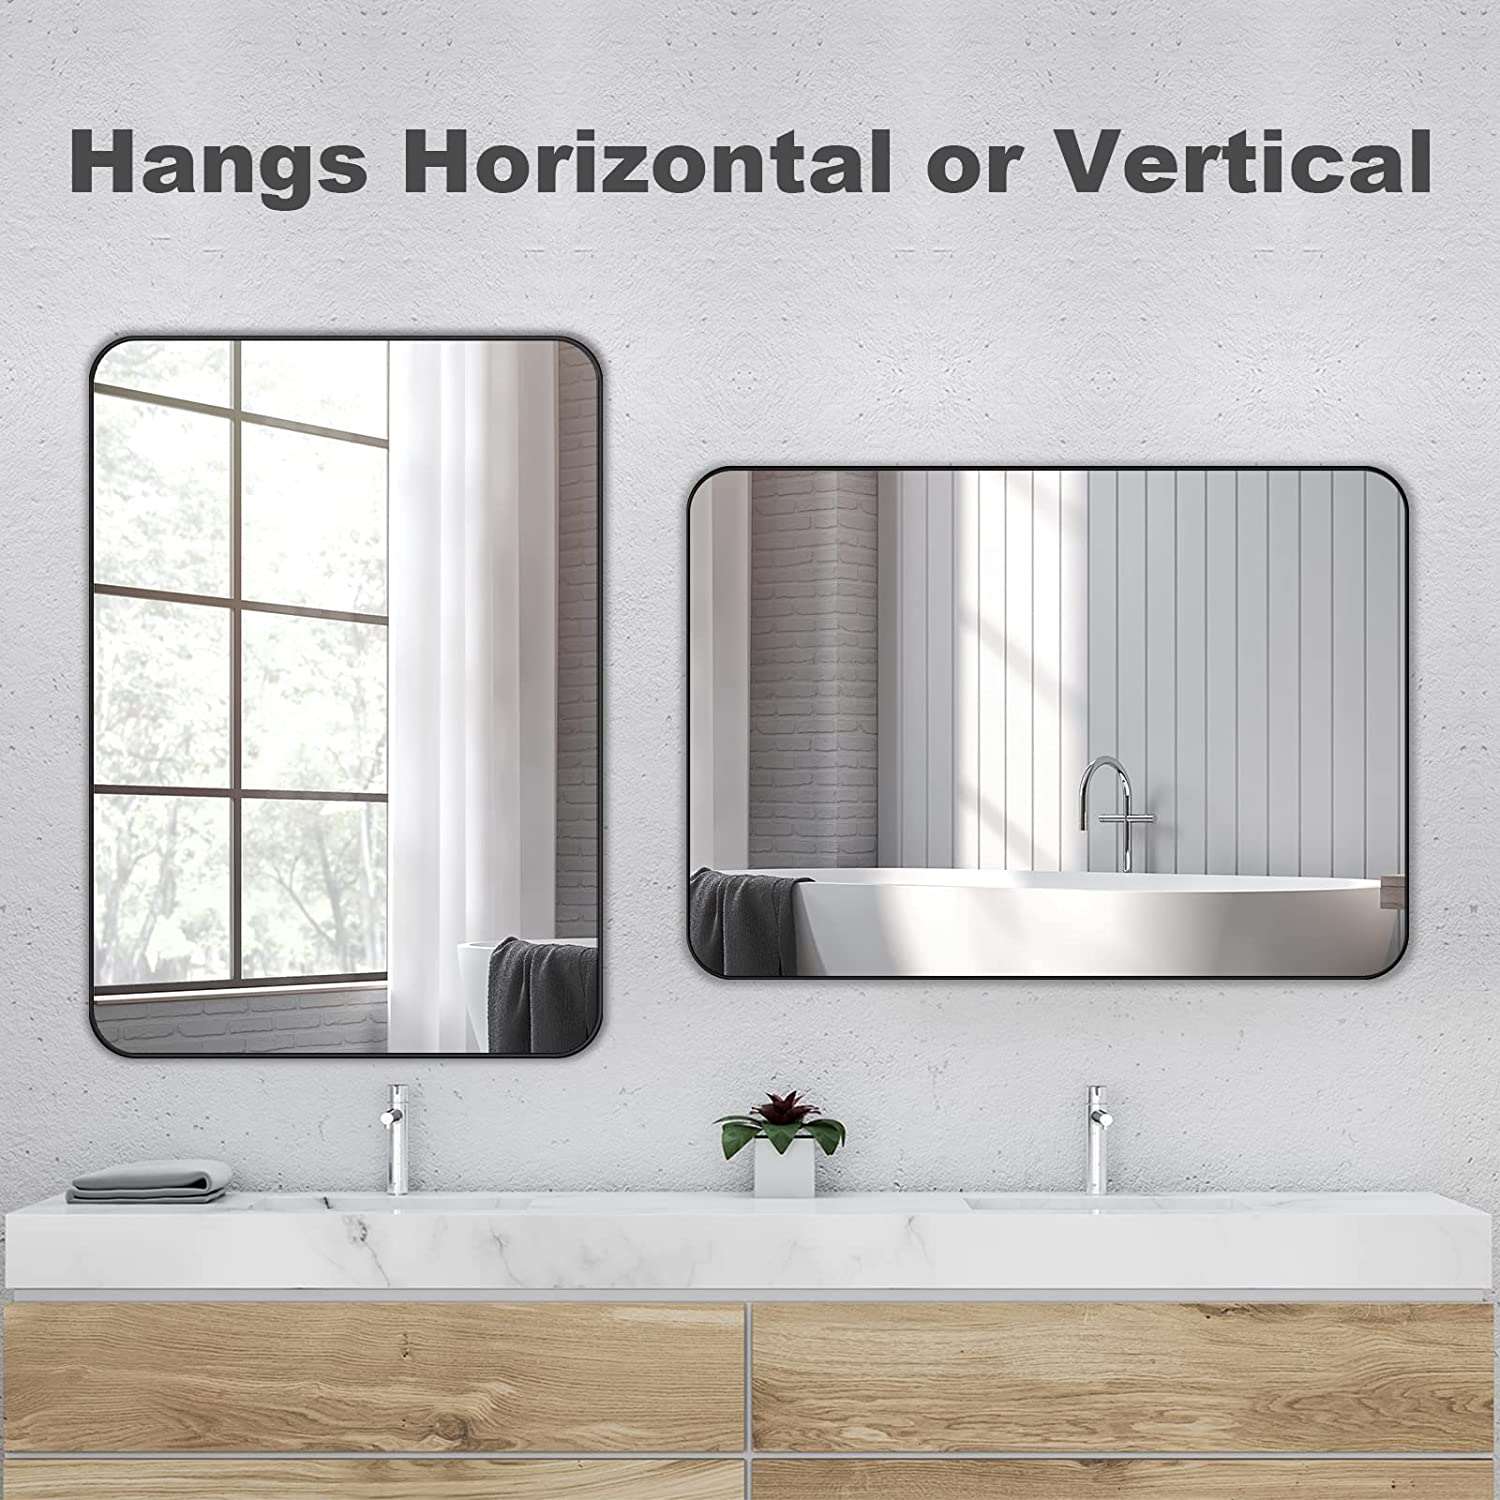 Amorho 24x 36 Black Frame Mirror, Rounded Corner Rectangle Mirror, Matte Black Bathroom Mirror, Metal Vanity Mirror, Shatter-Proof Safe Mirror, CRI 90 (Horizontal/ Vertical)